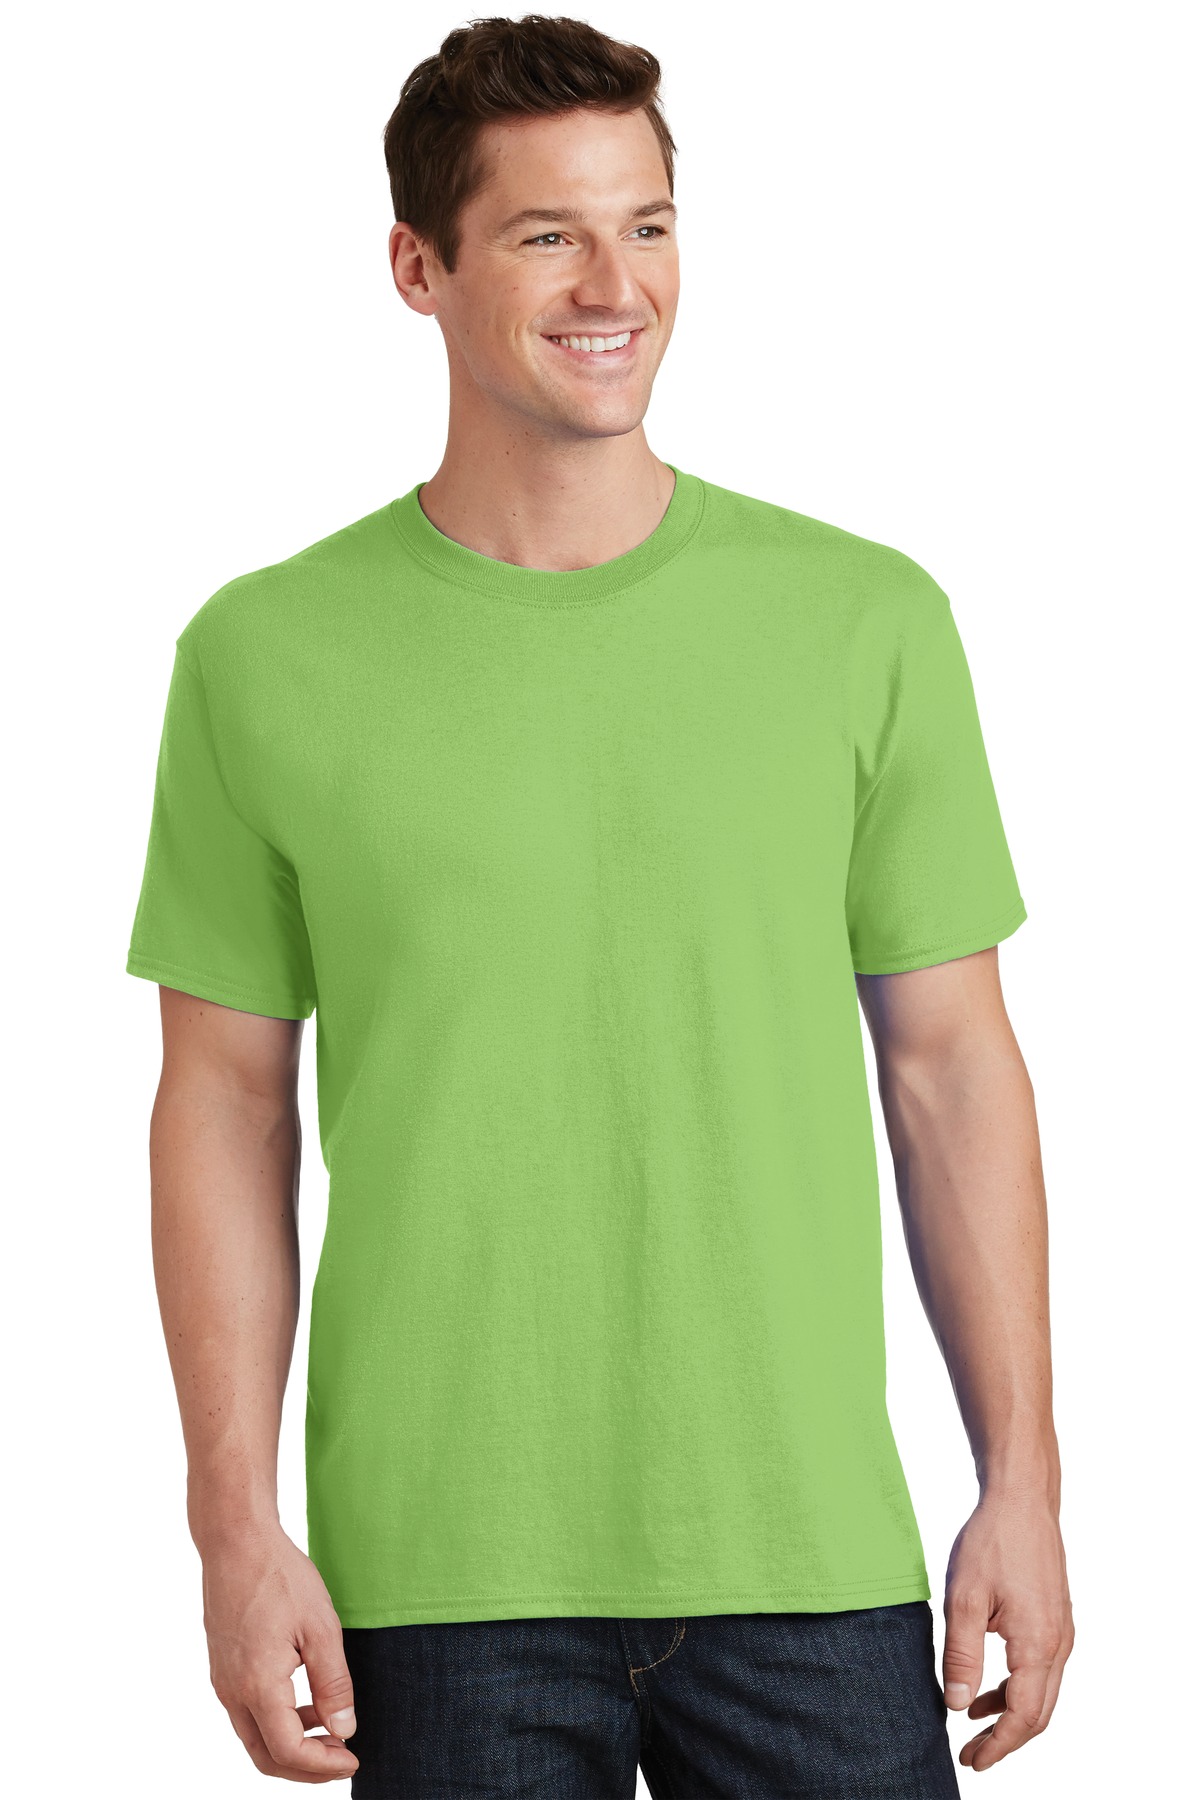 https://images.shirtspace.com/fullsize/RsGcwpwbTysnZ1clJnND6Q%3D%3D/80103/10477-port-company-pc54-core-cotton-tee-front-lime.jpg